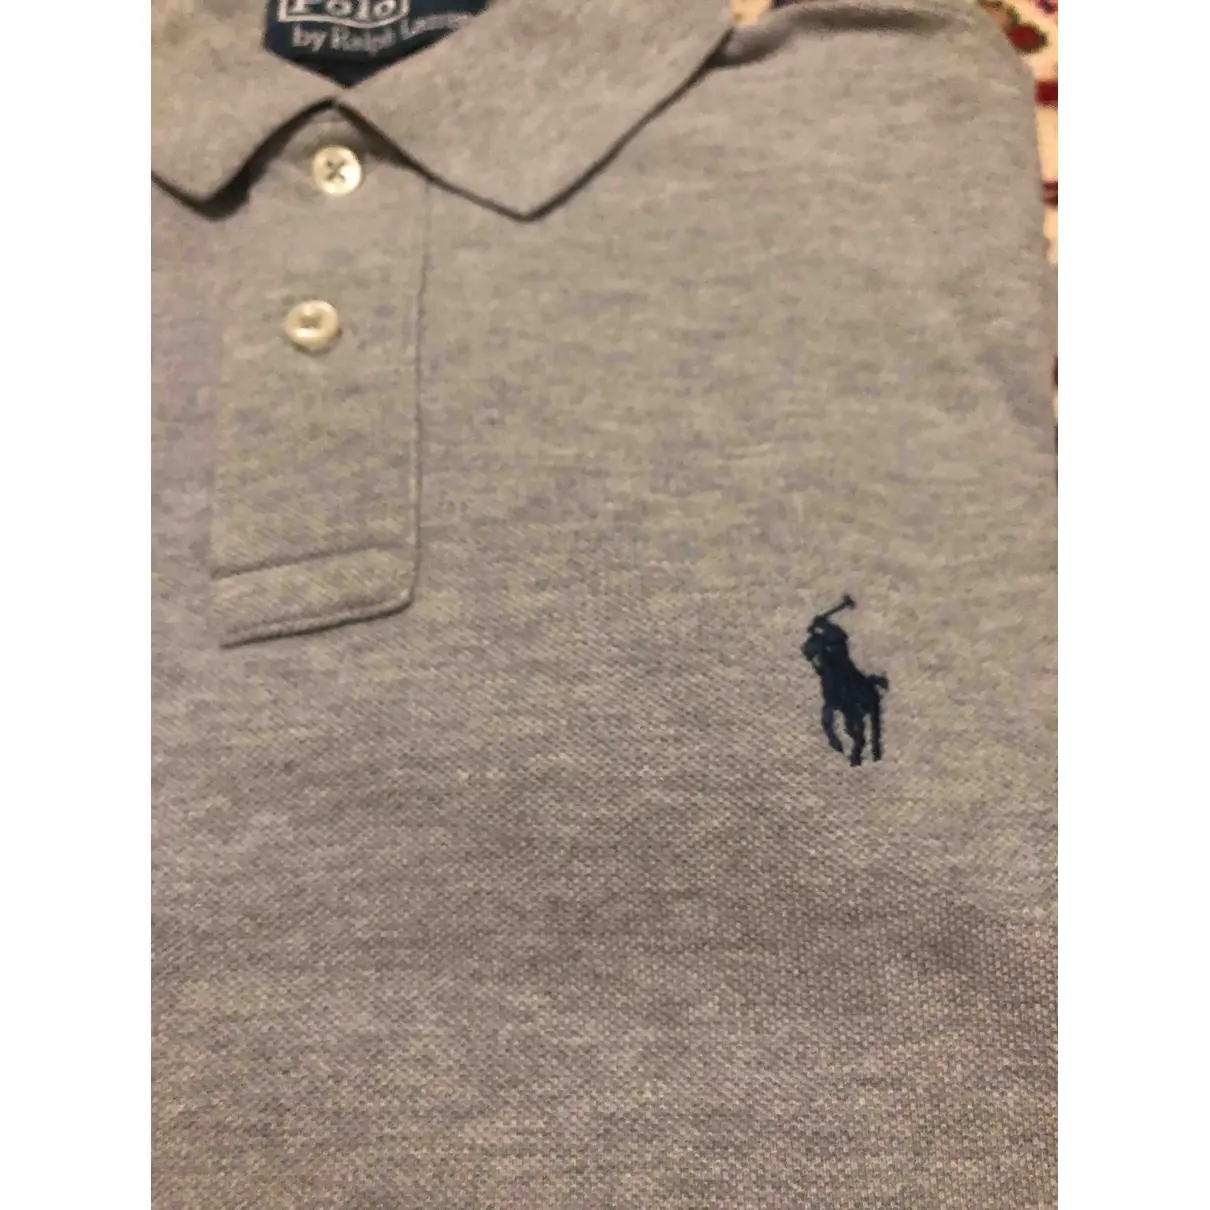 Polo Ralph Lauren Polo ajusté manches courtes polo shirt for sale